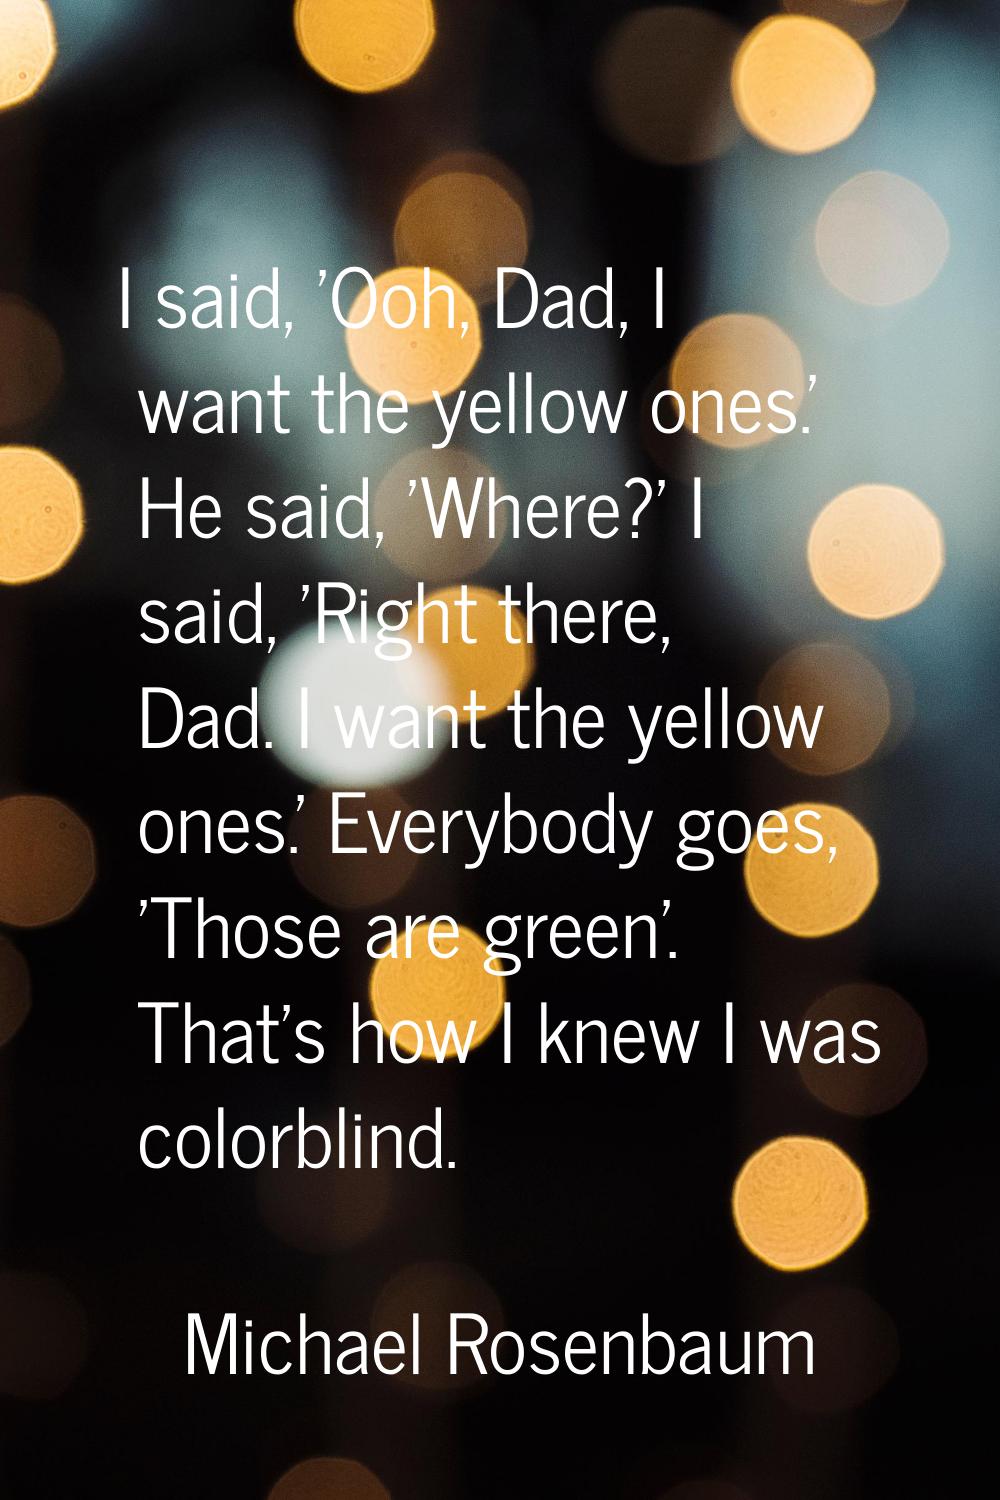 I said, 'Ooh, Dad, I want the yellow ones.' He said, 'Where?' I said, 'Right there, Dad. I want the